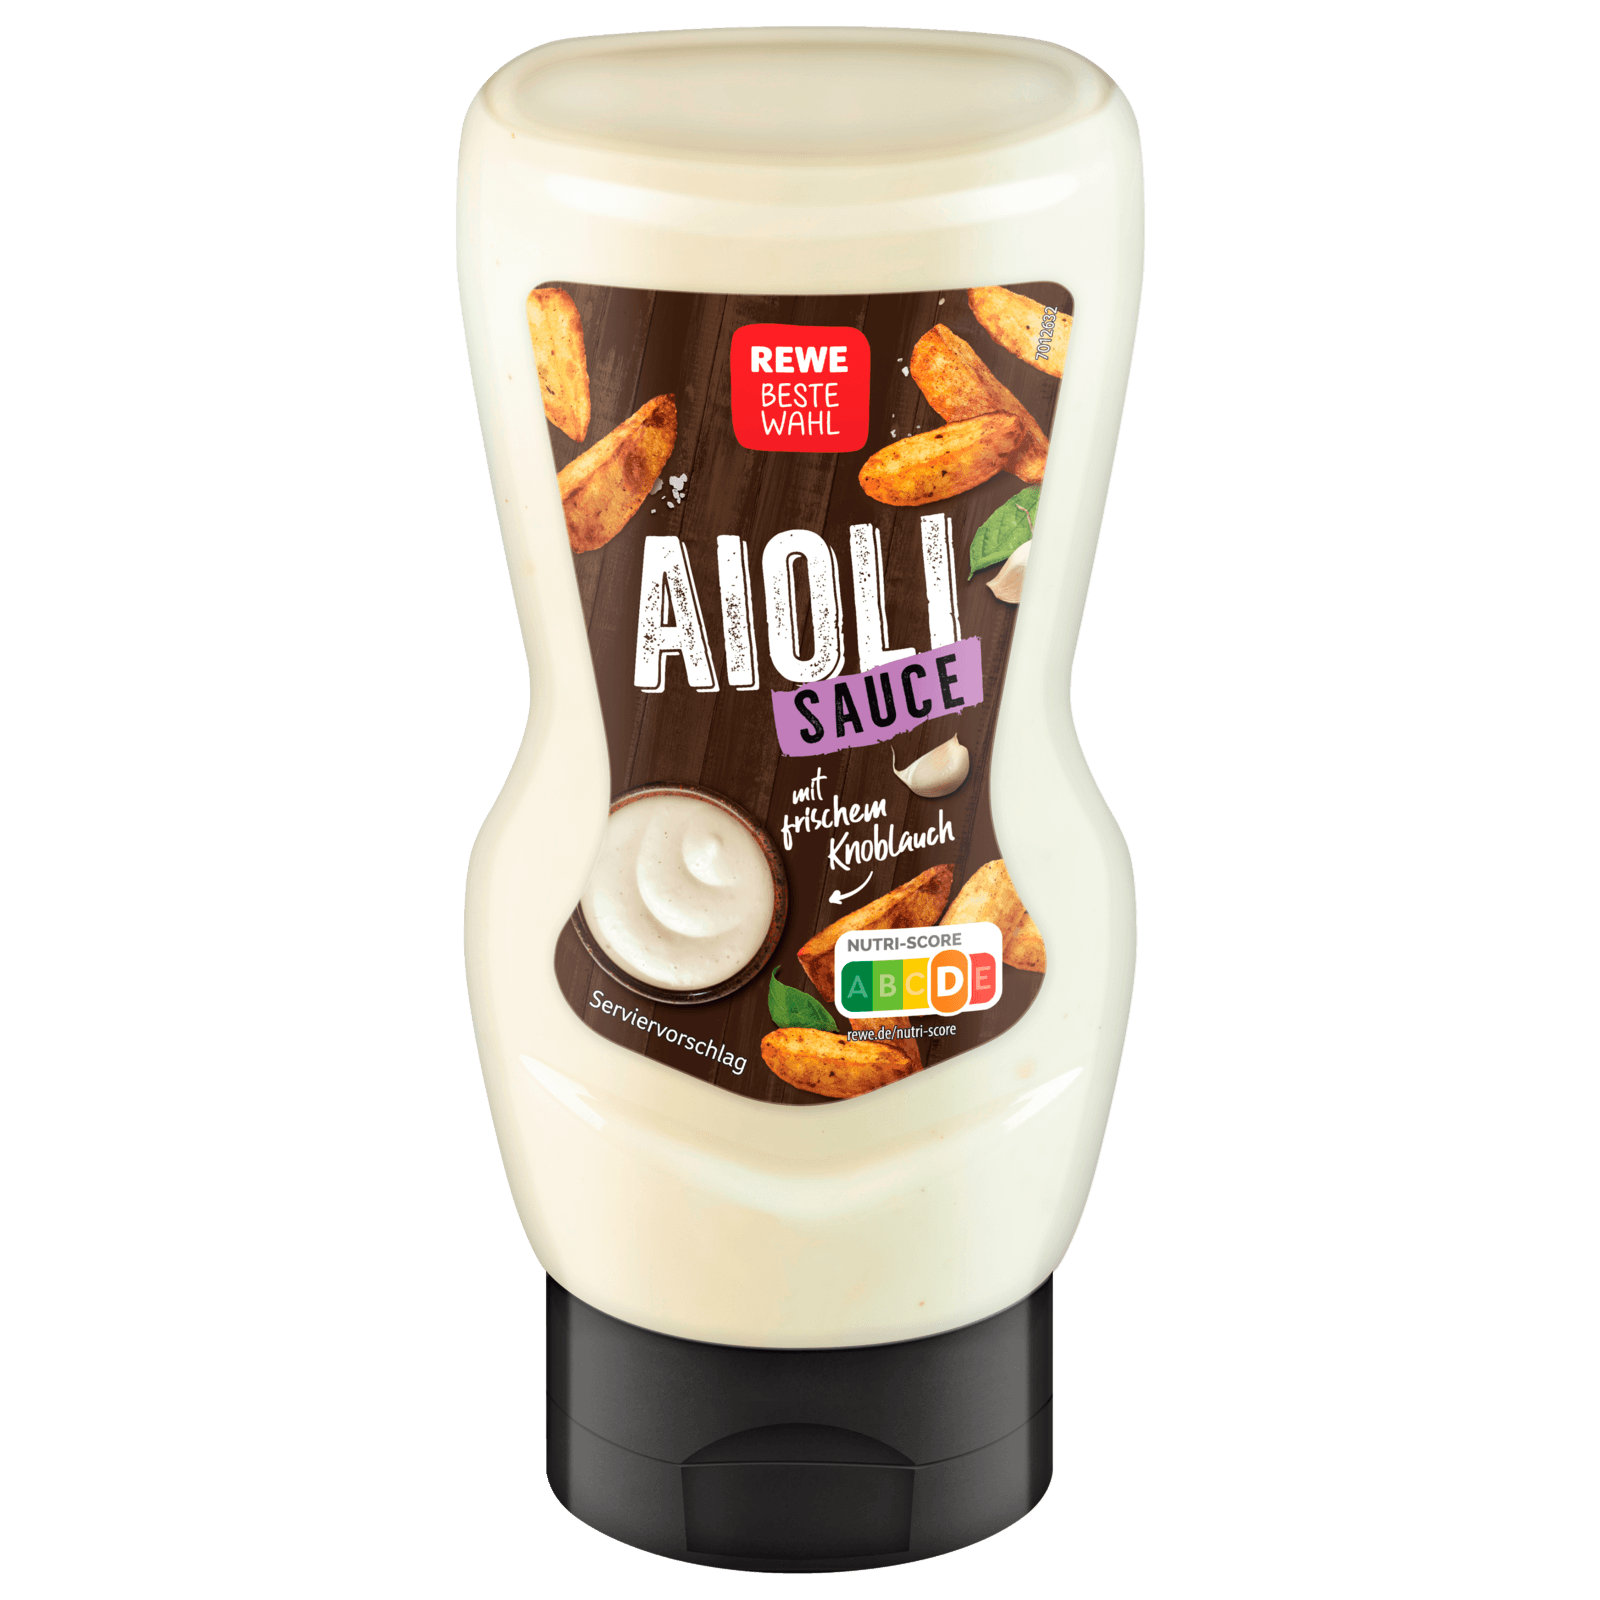 REWE Beste Wahl Aioli Sauce 300ml bei REWE online bestellen!